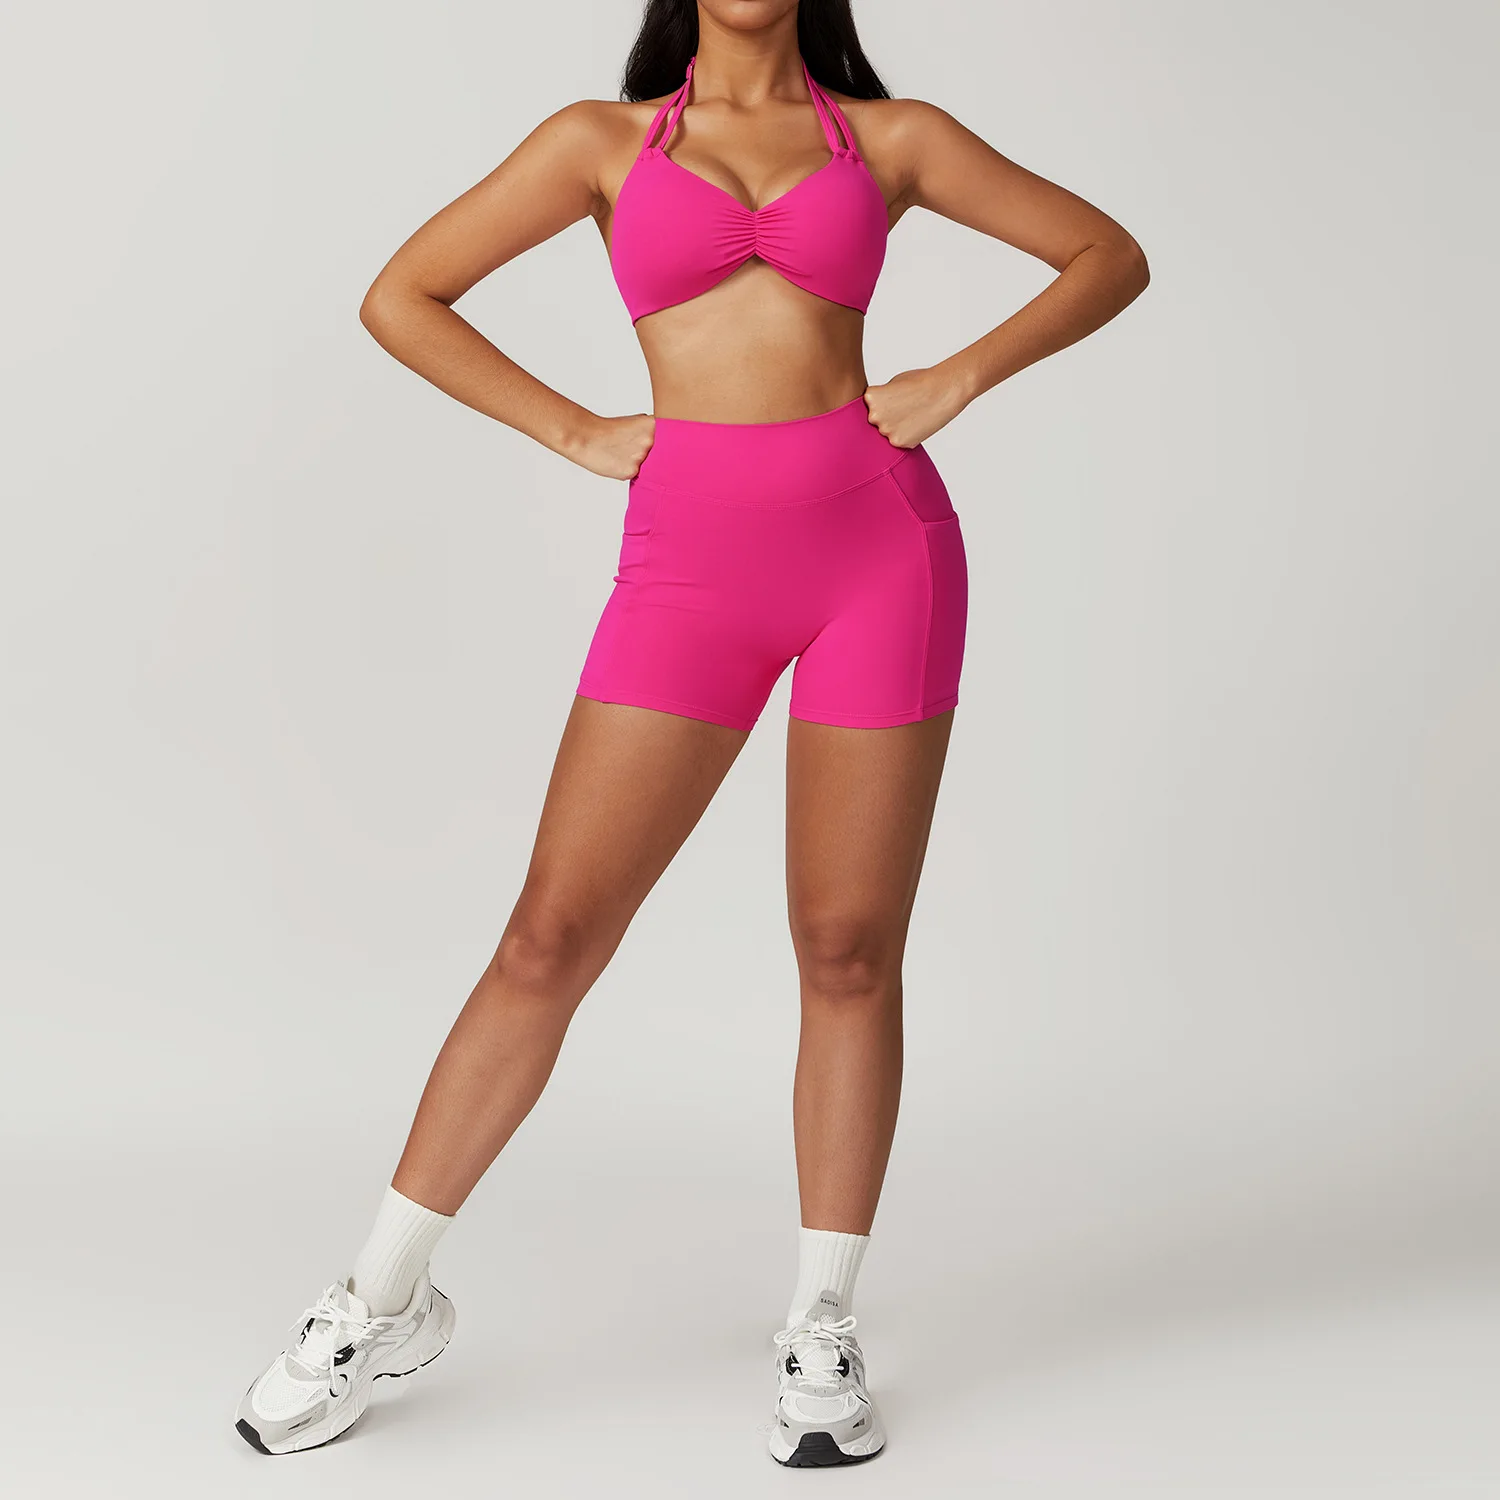 Wholesale Sportswear Clothings 3 Piece Sports Bra Set Gym Fitness Sets Activewear Women Yoga Shorts Sets Fitness Clothing Women